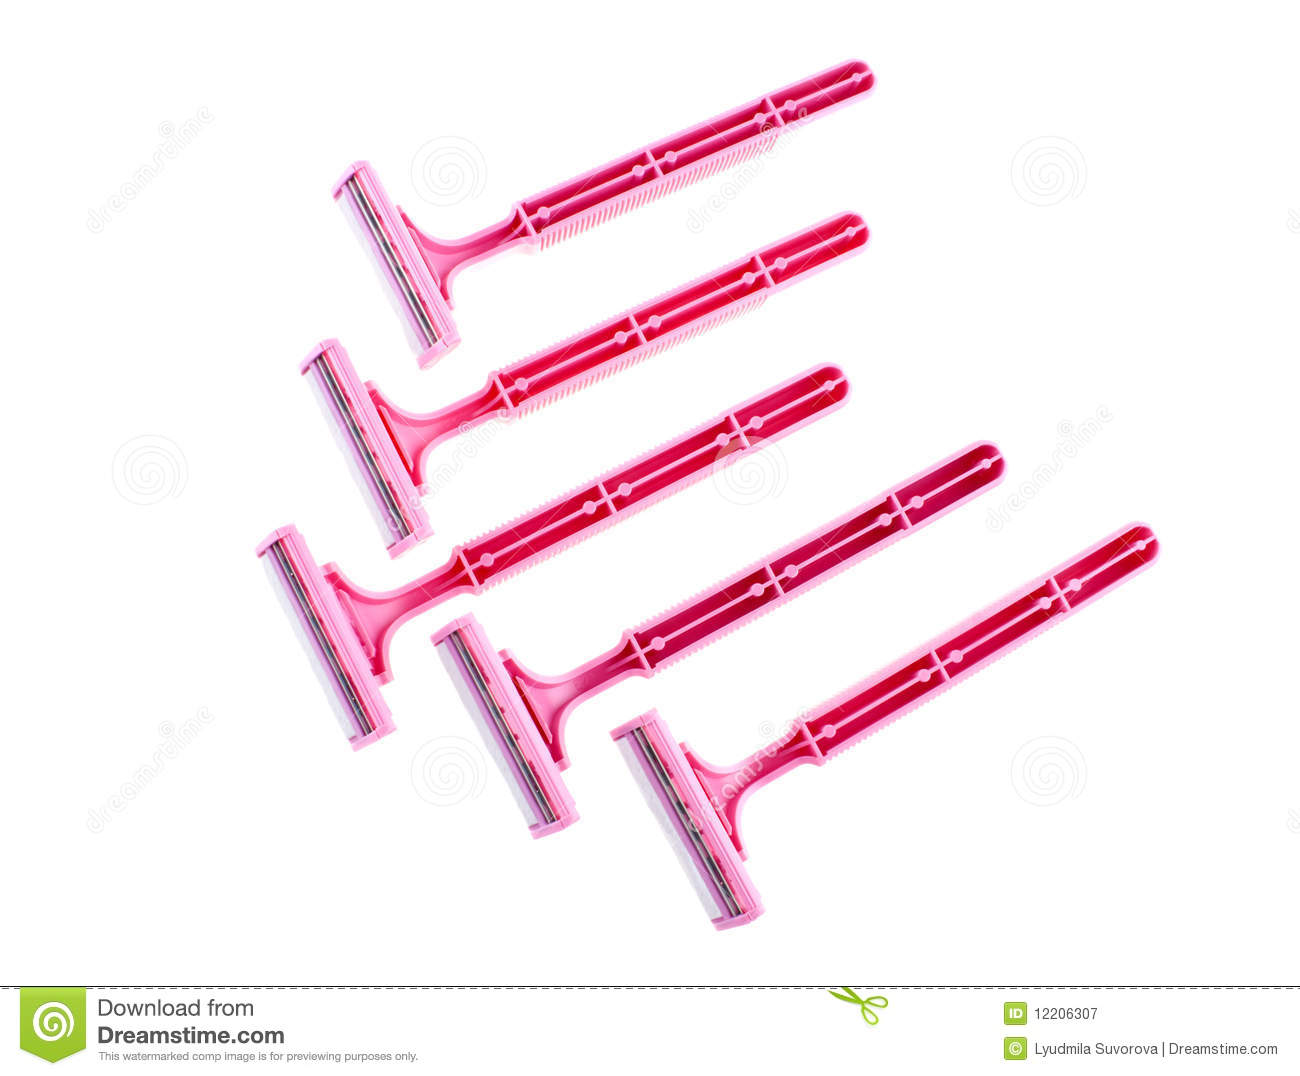 Pink Safety Razors Royalty Free Stock Photography   Image  12206307